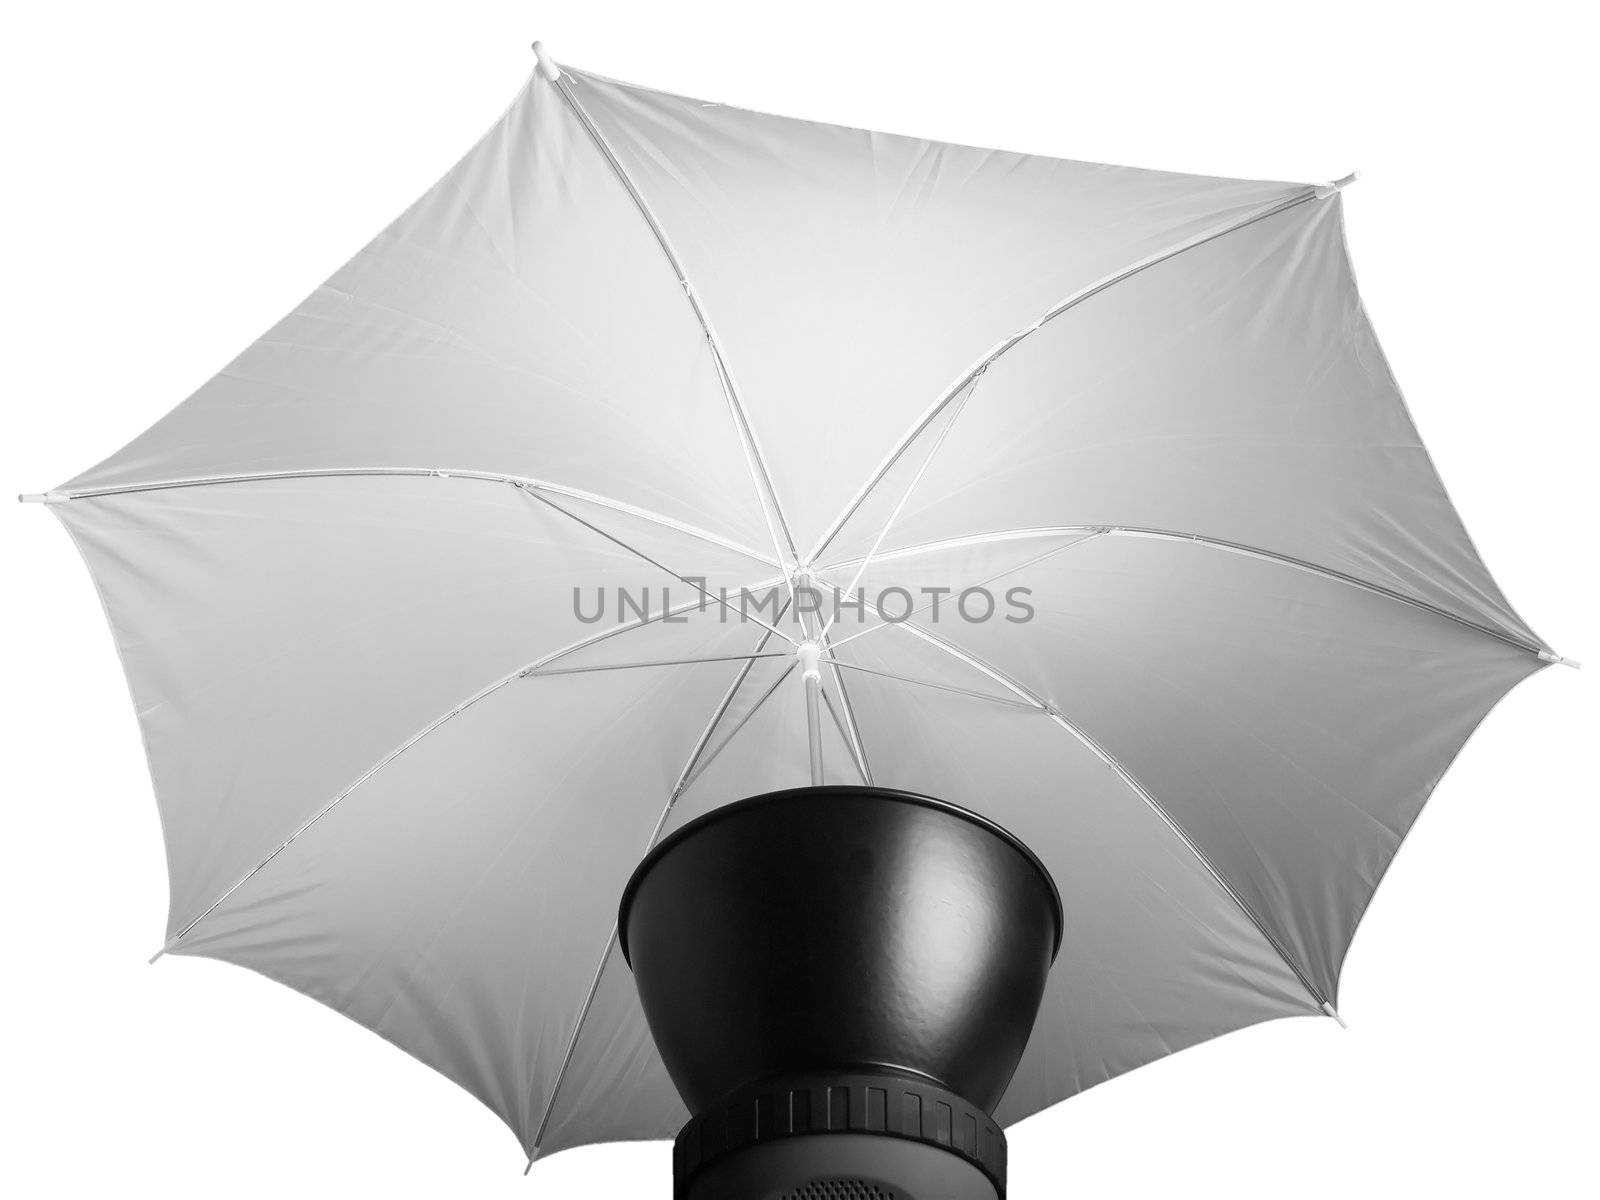 Lighting photo umbrella used with strobo lights in photographic studio